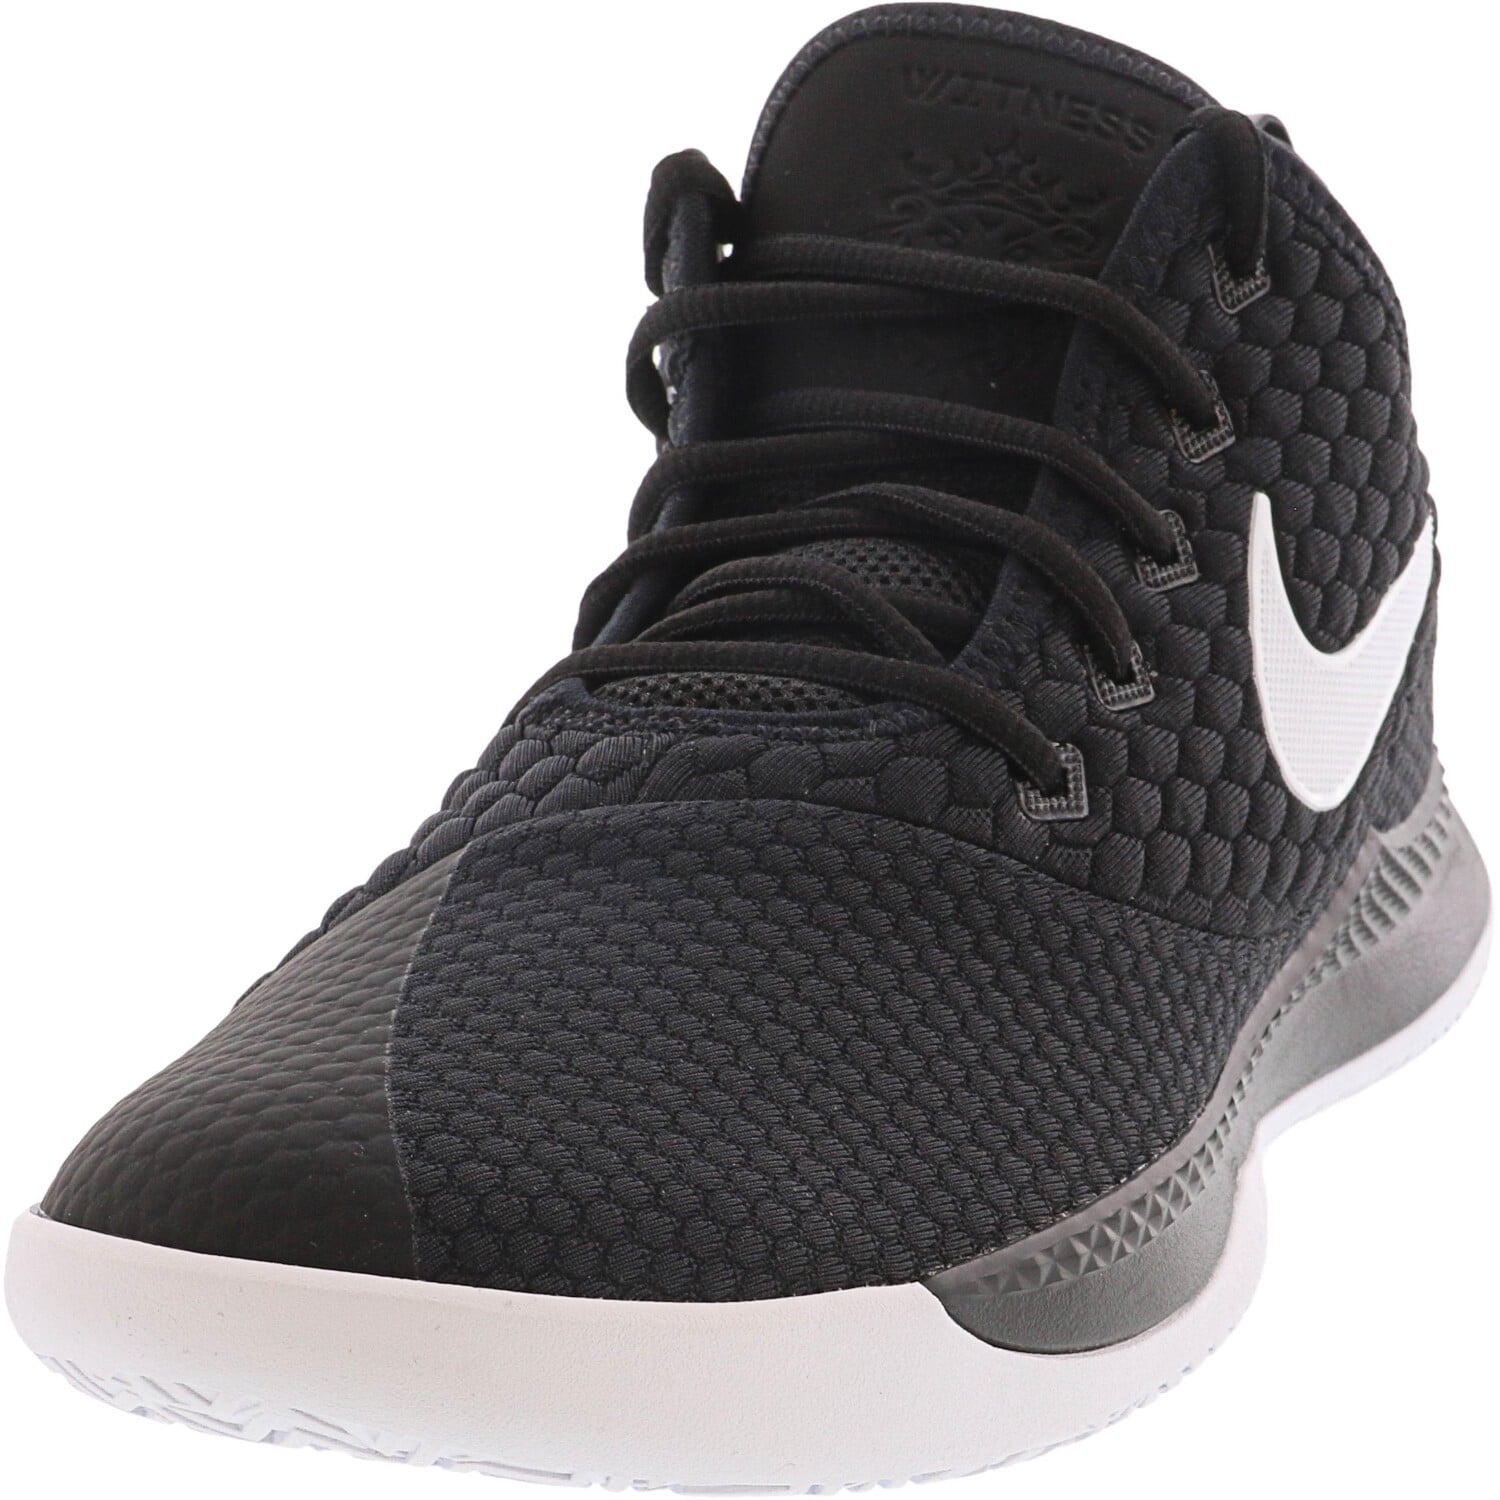 Nike Lebron Witness Iii Black / White Cool Grey Ankle-High Basketball - 15M 13M - Walmart.com